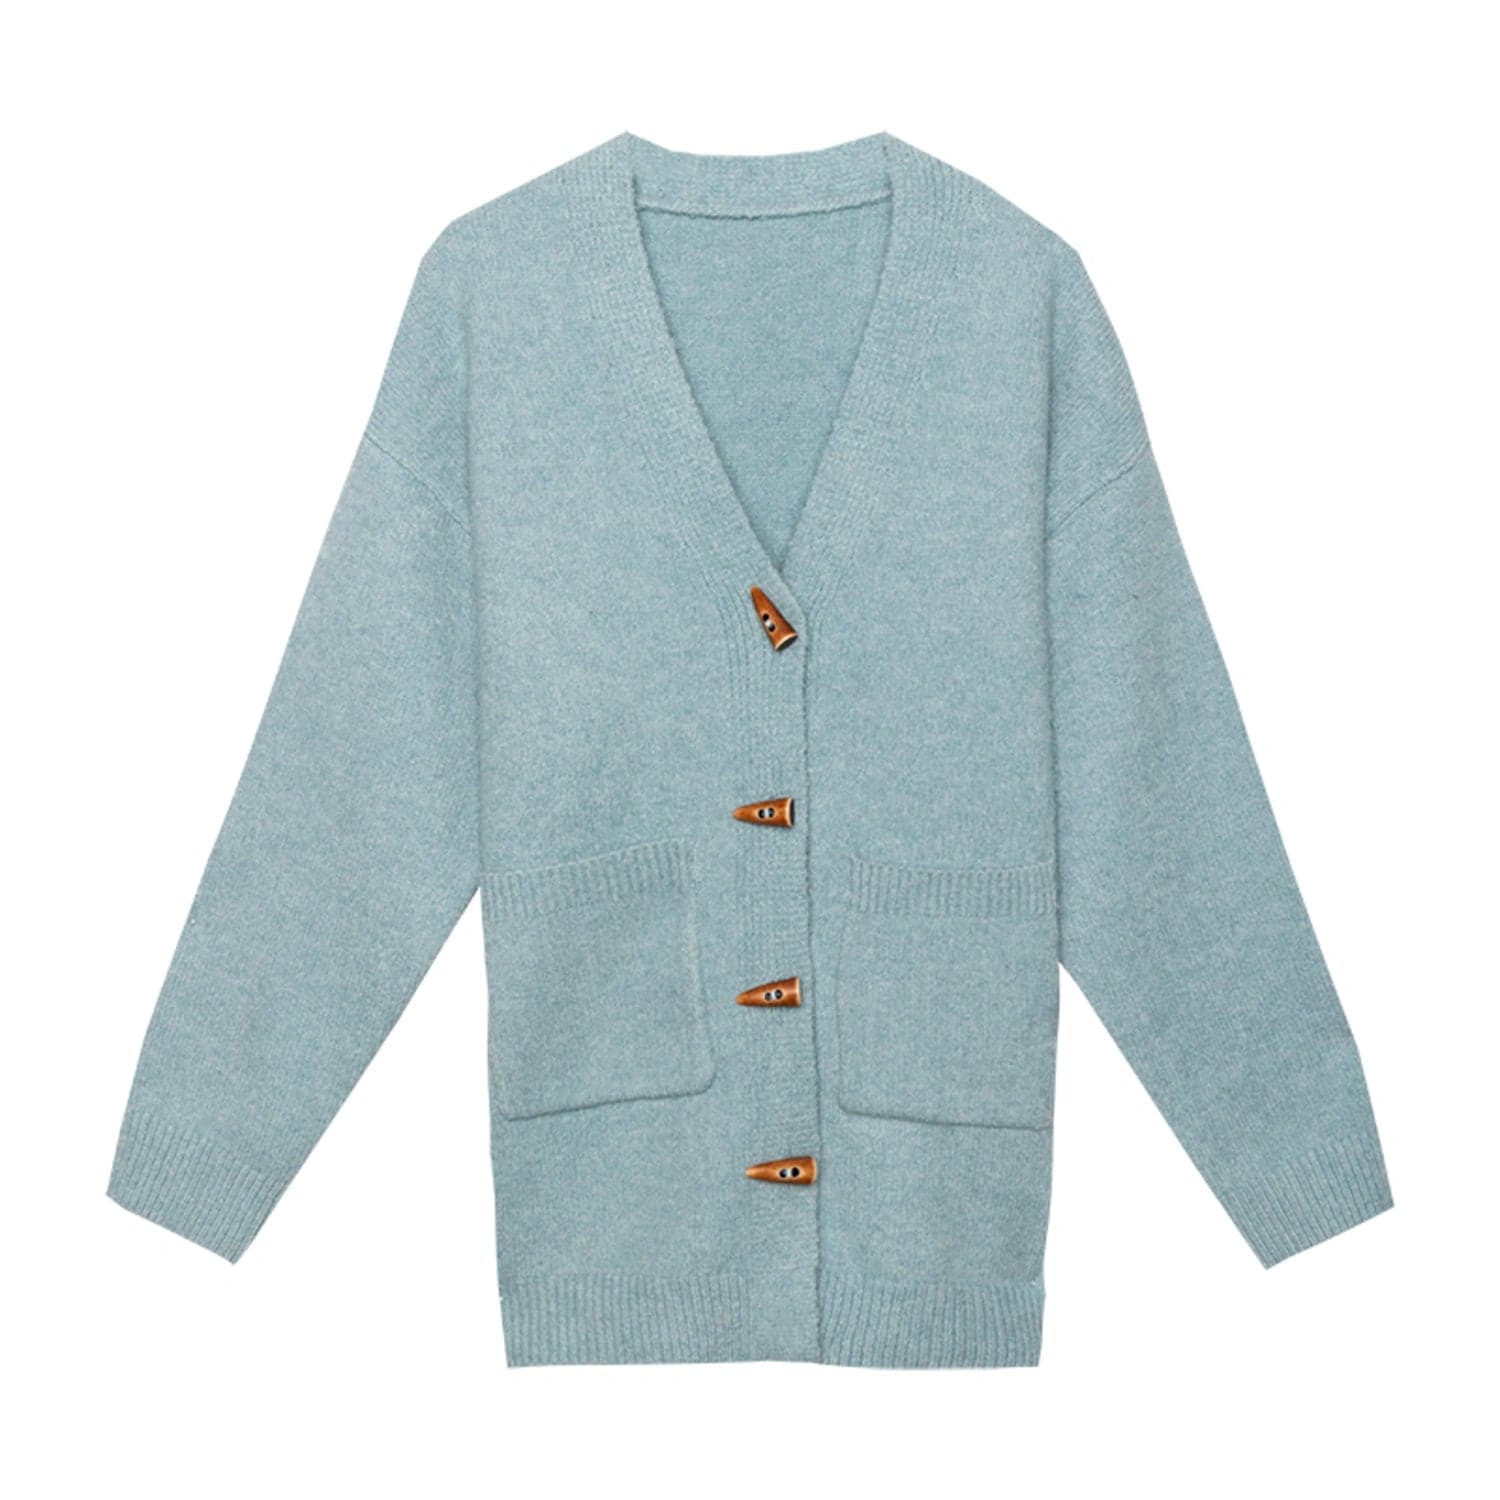 Casual Knit Cardigan Jacket with Unique Button Details